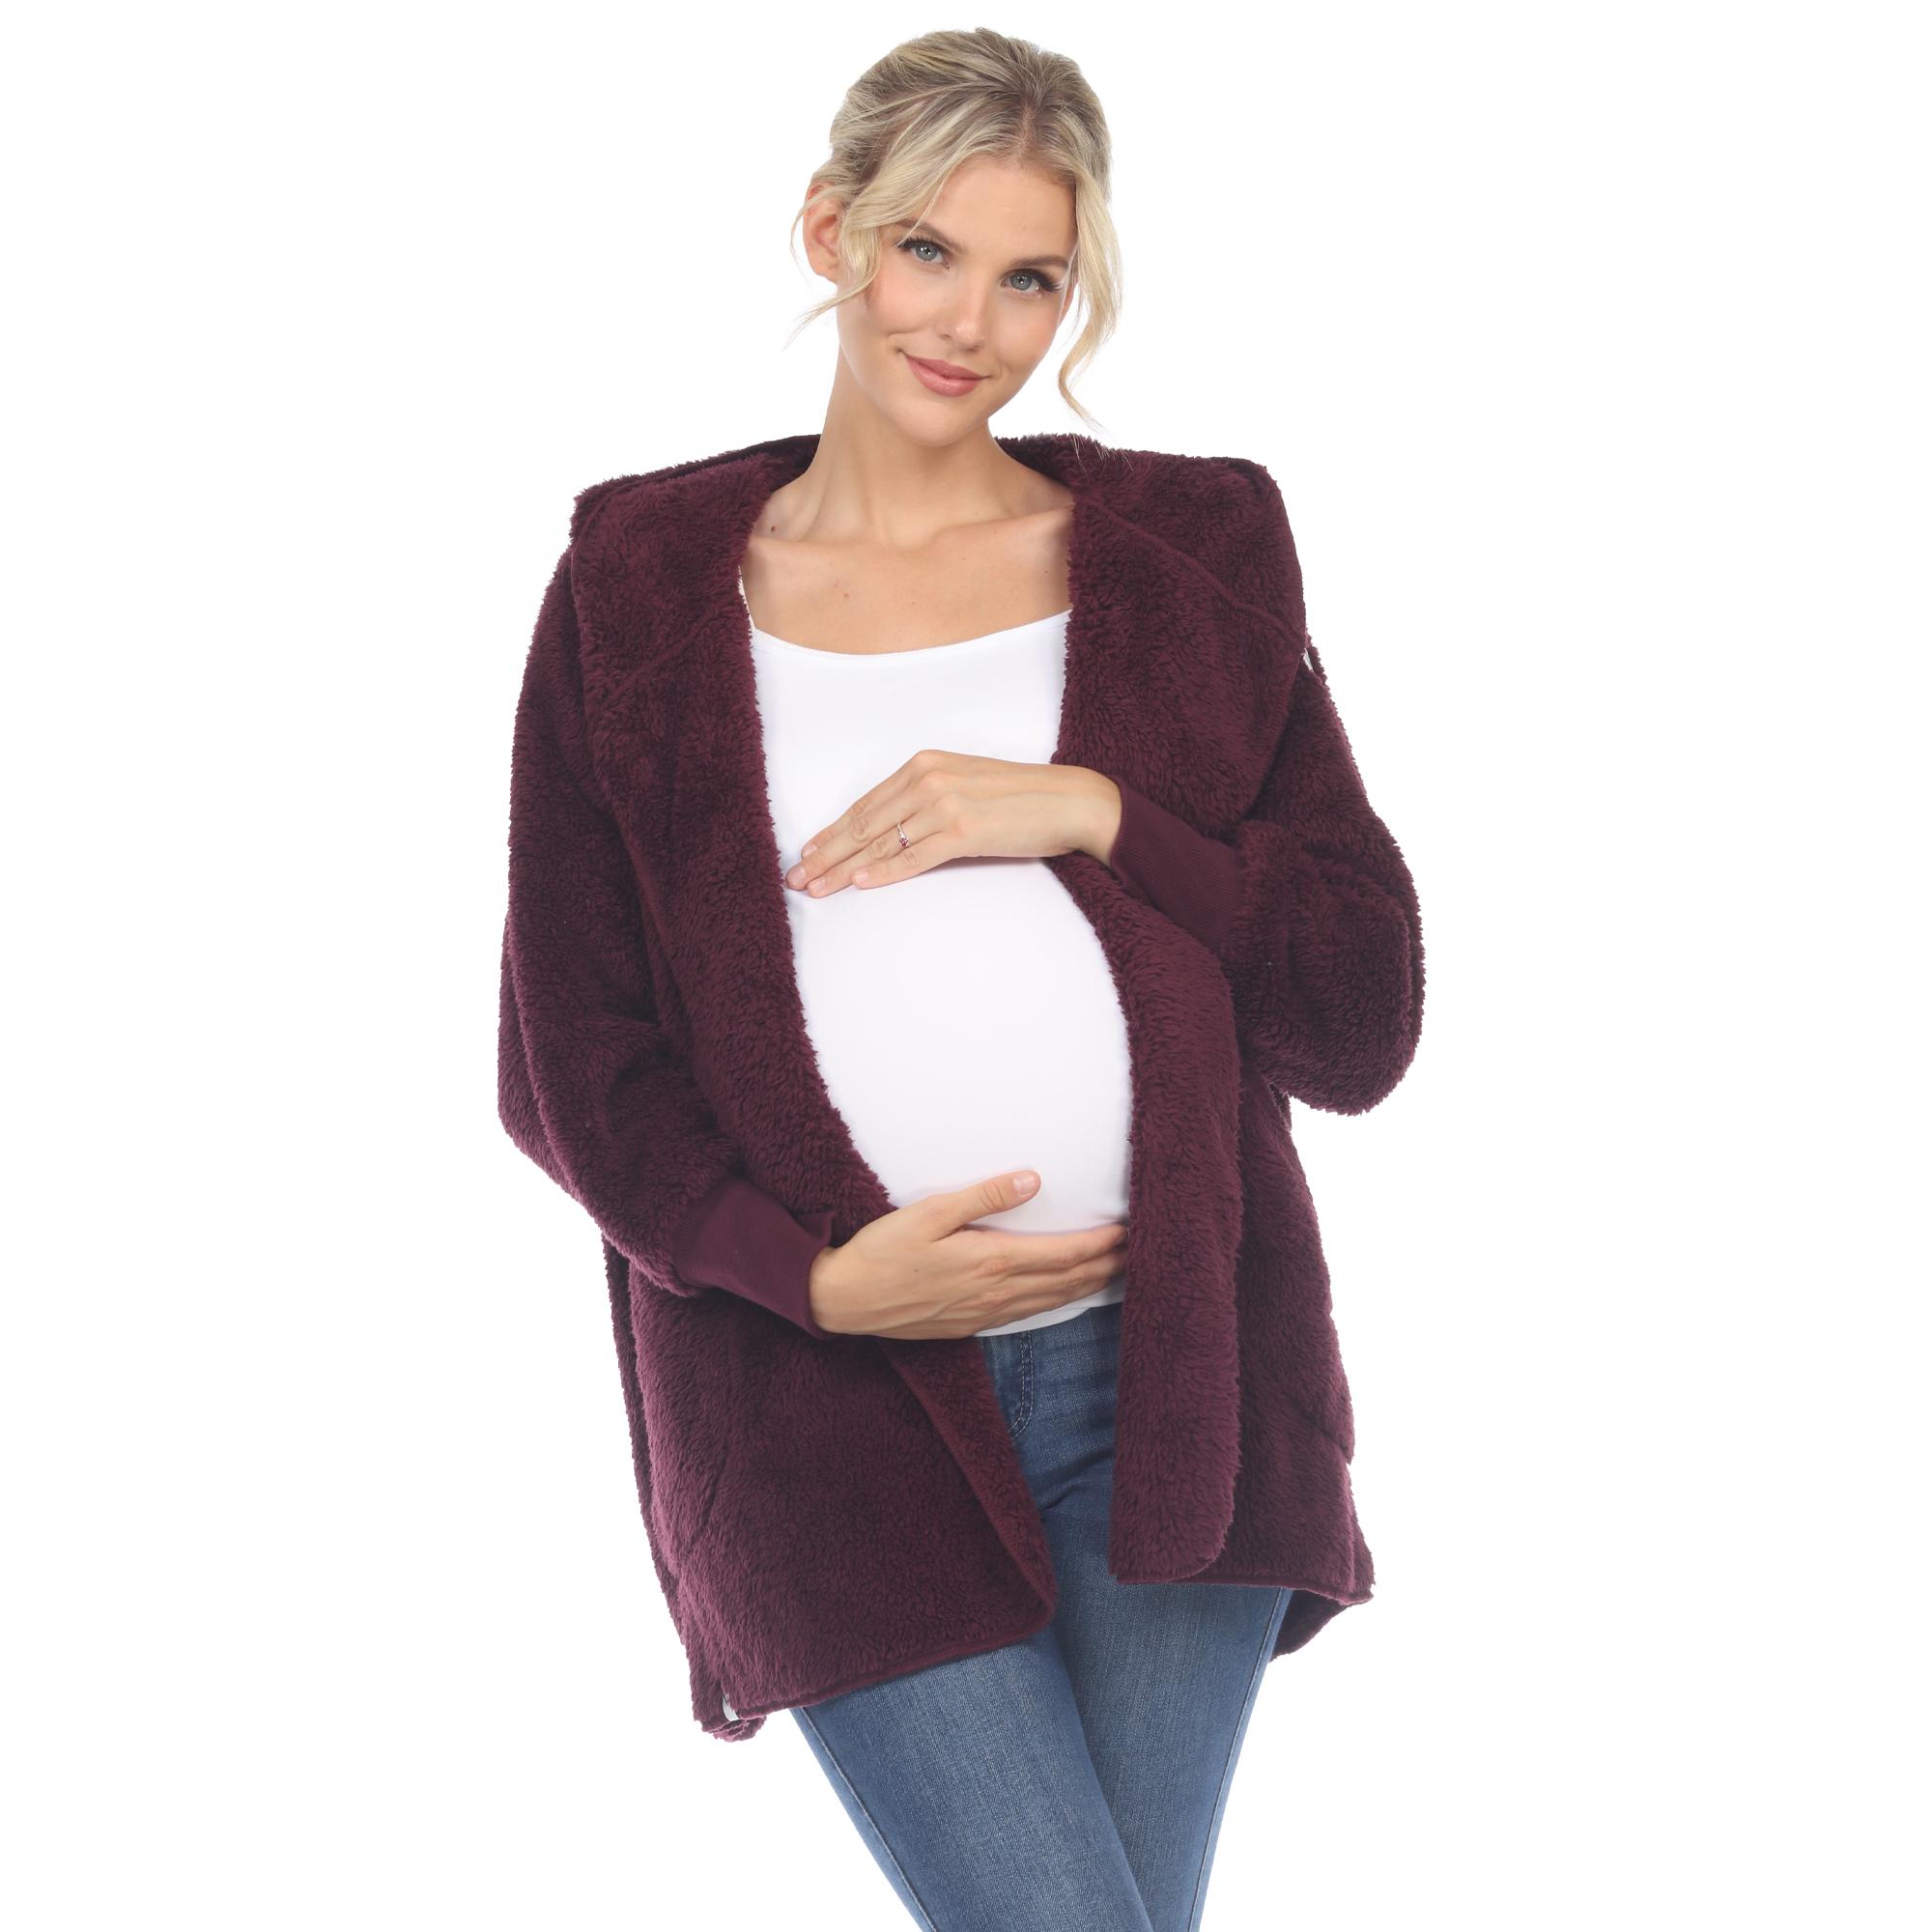 White Mark Womenâs Maternity Plush Hooded Cardigan With Pockets - Purple, 1X/2X